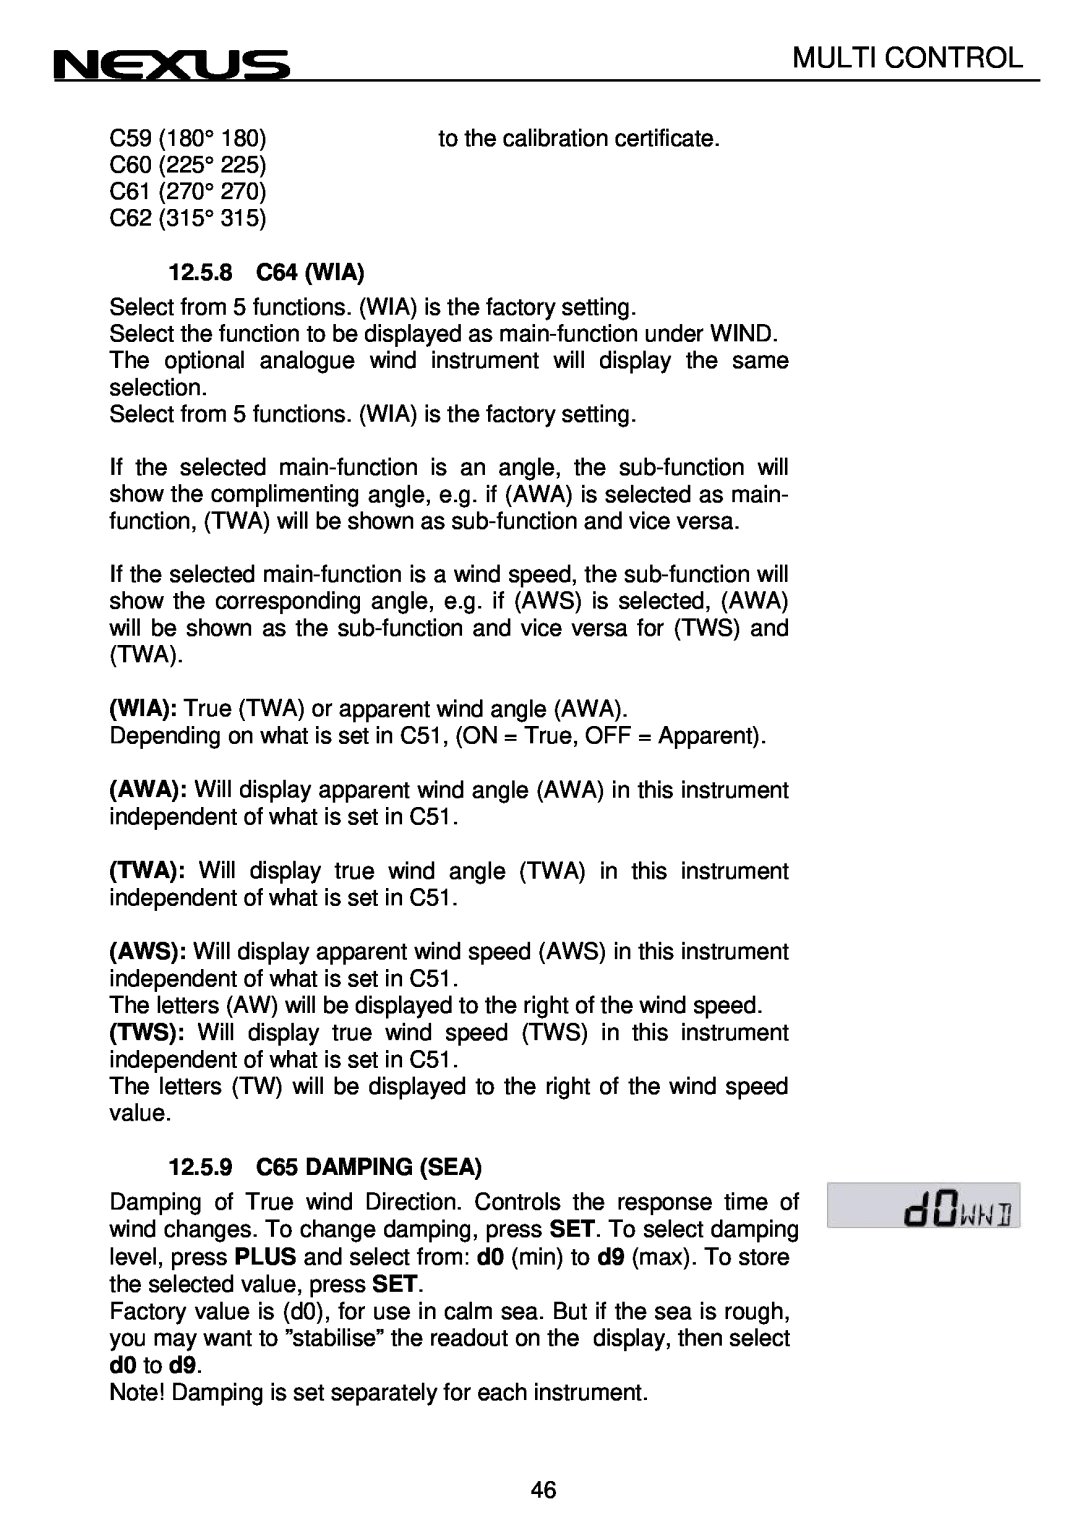 Nexus 21 Multi Control operation manual 12.5.8C64 WIA, 12.5.9C65 DAMPING SEA 